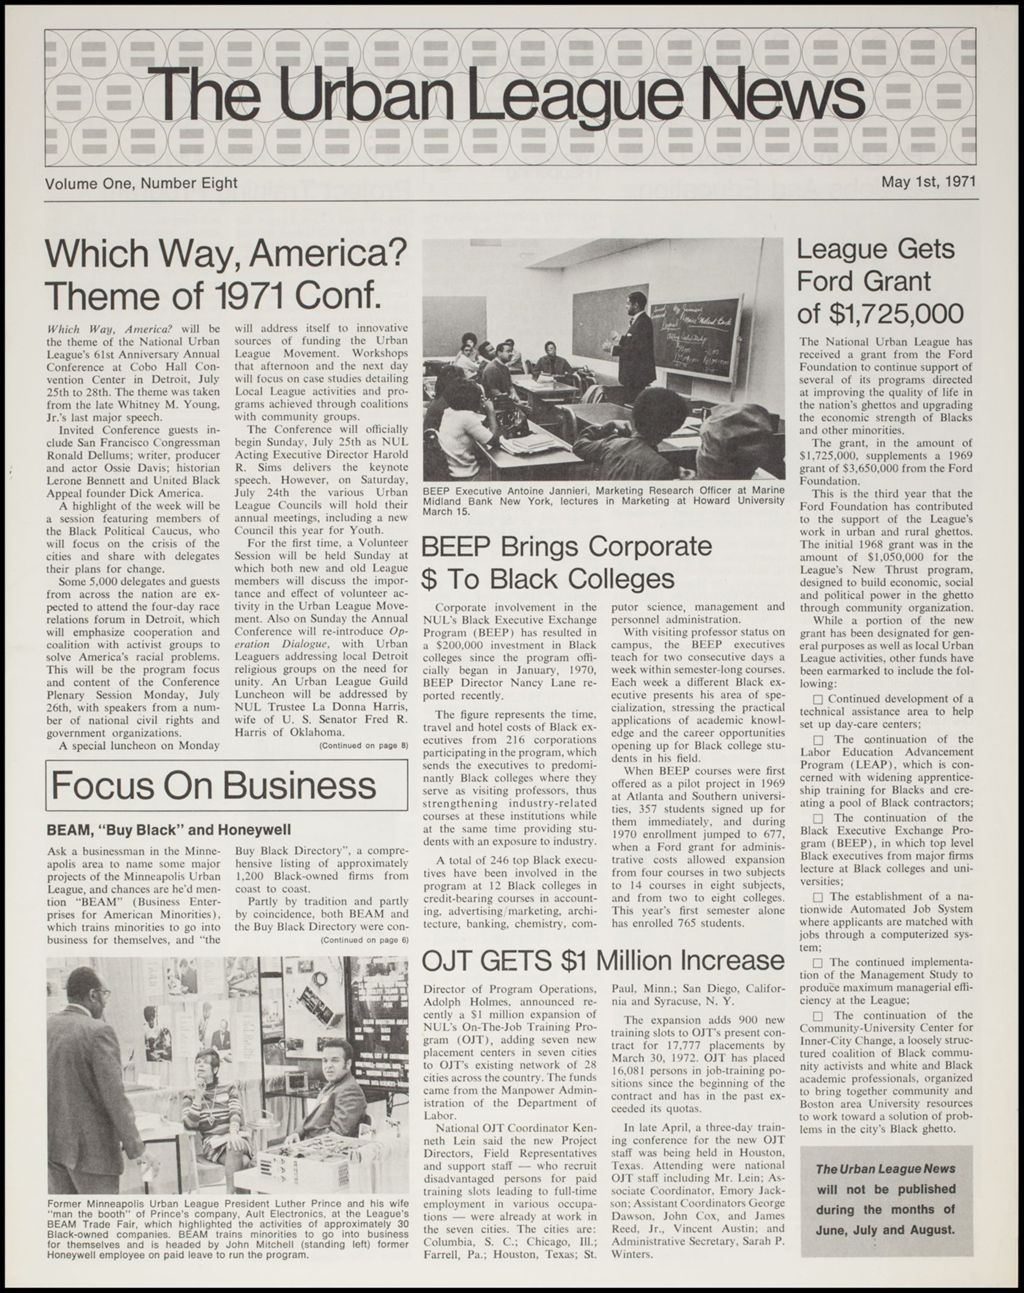 Miniature of The Urban League News, Volume I, Numbers 8-12, 1971 (Folder IV-758b)